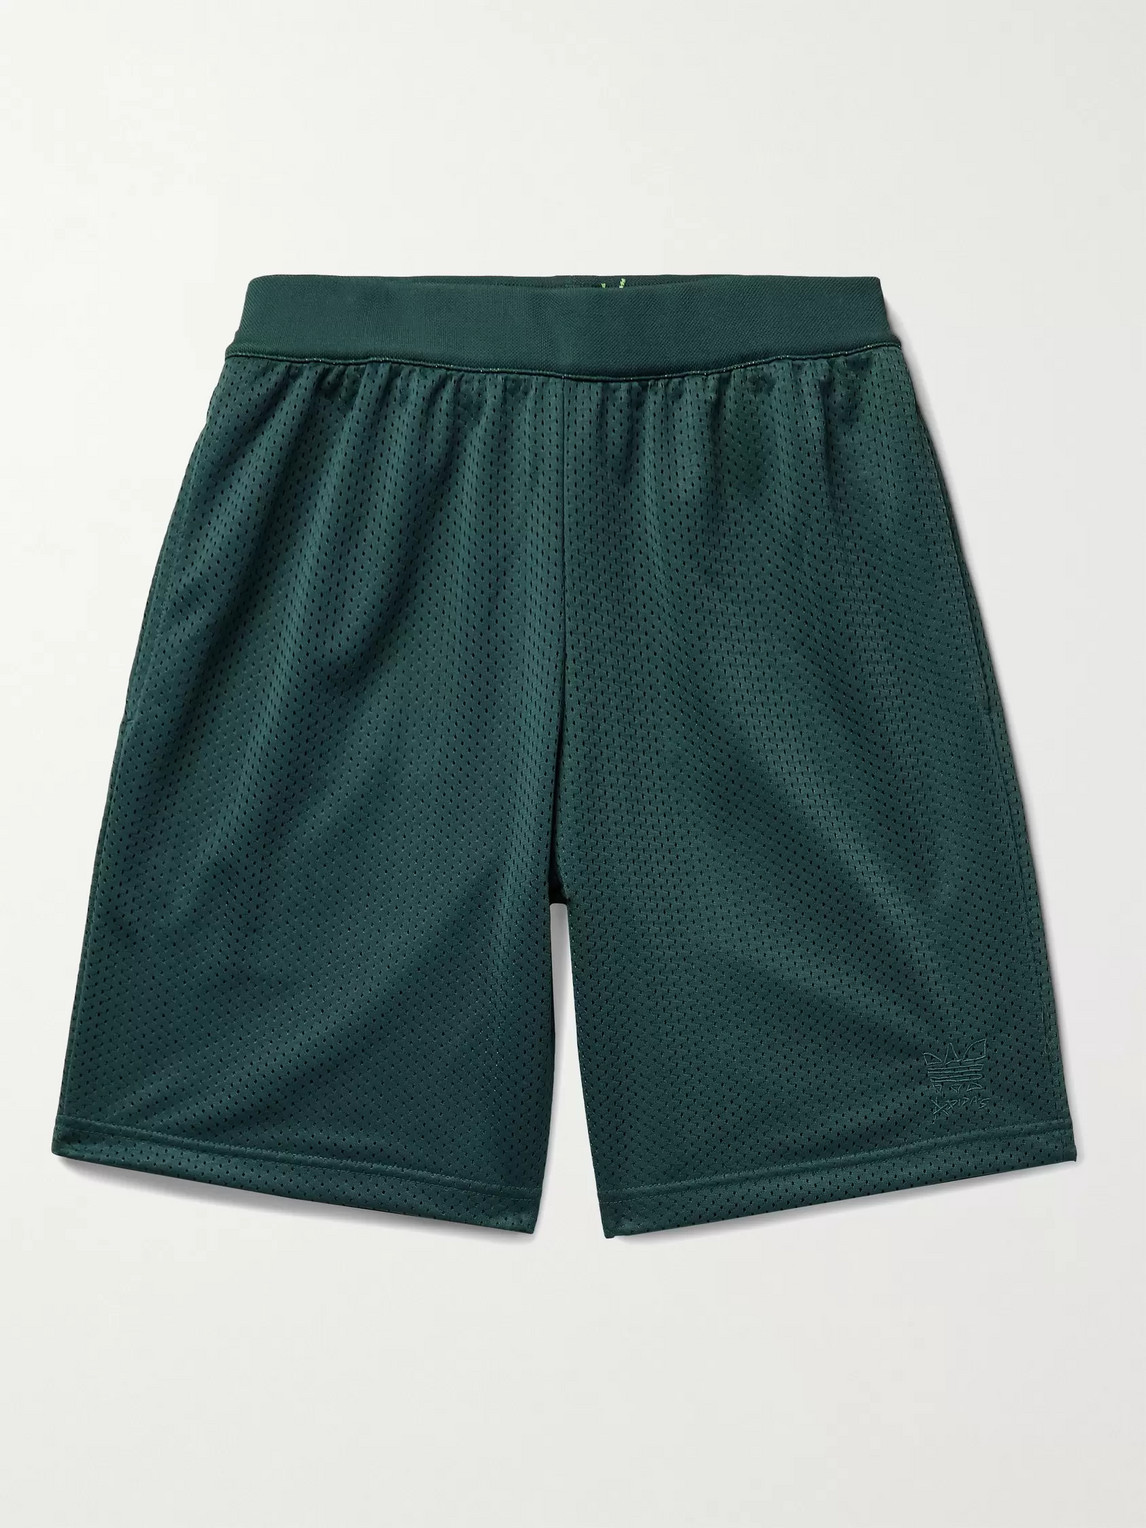 Adidas Consortium Jonah Hill Mesh Shorts In Green